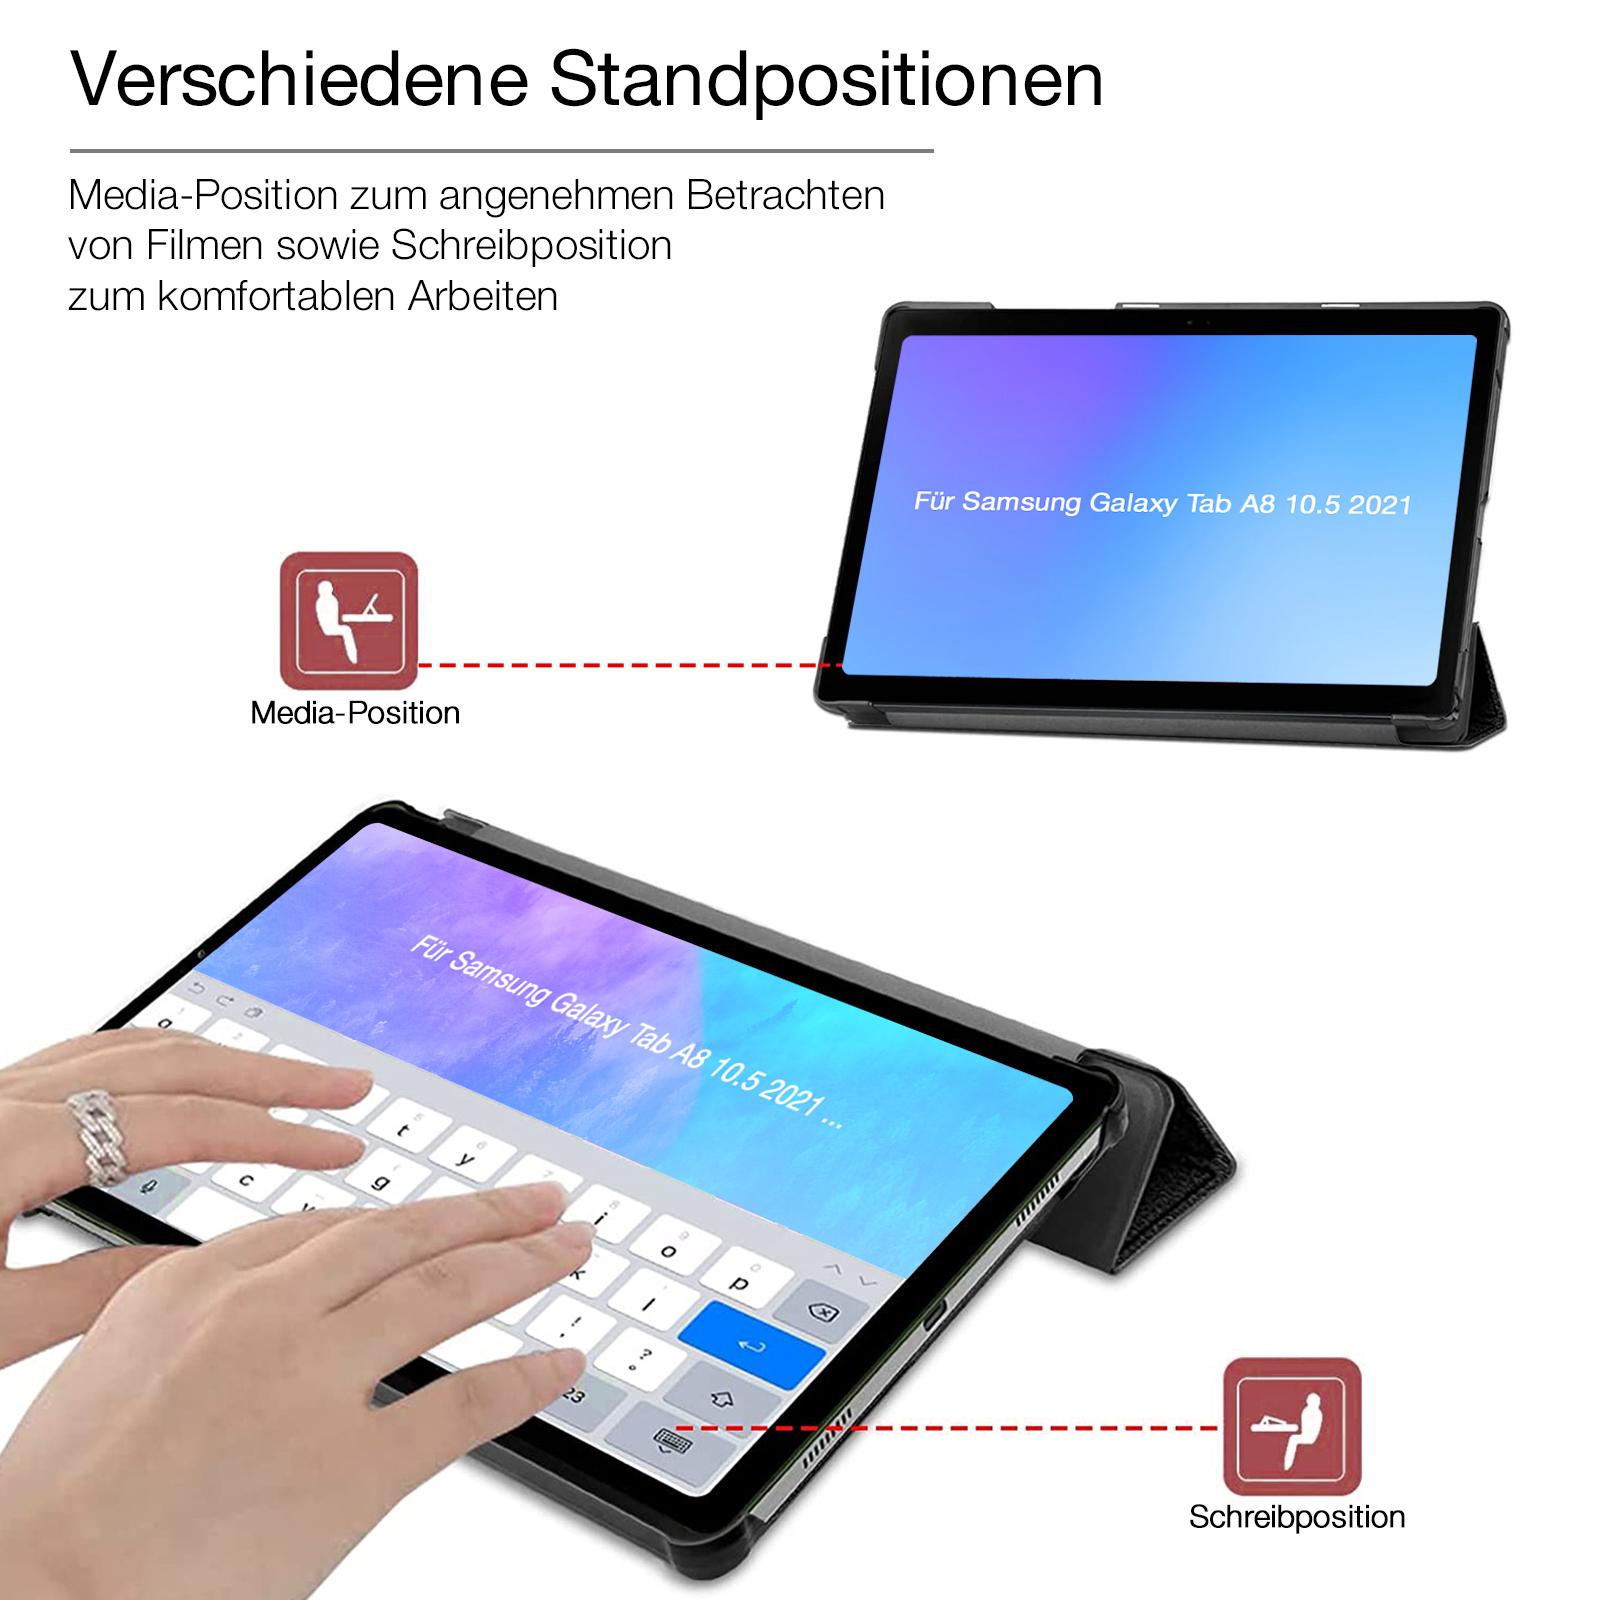 Schutzhülle 2x Folie für Samsung Galaxy Tab A8 10.5 2021 Tablet viele Farben